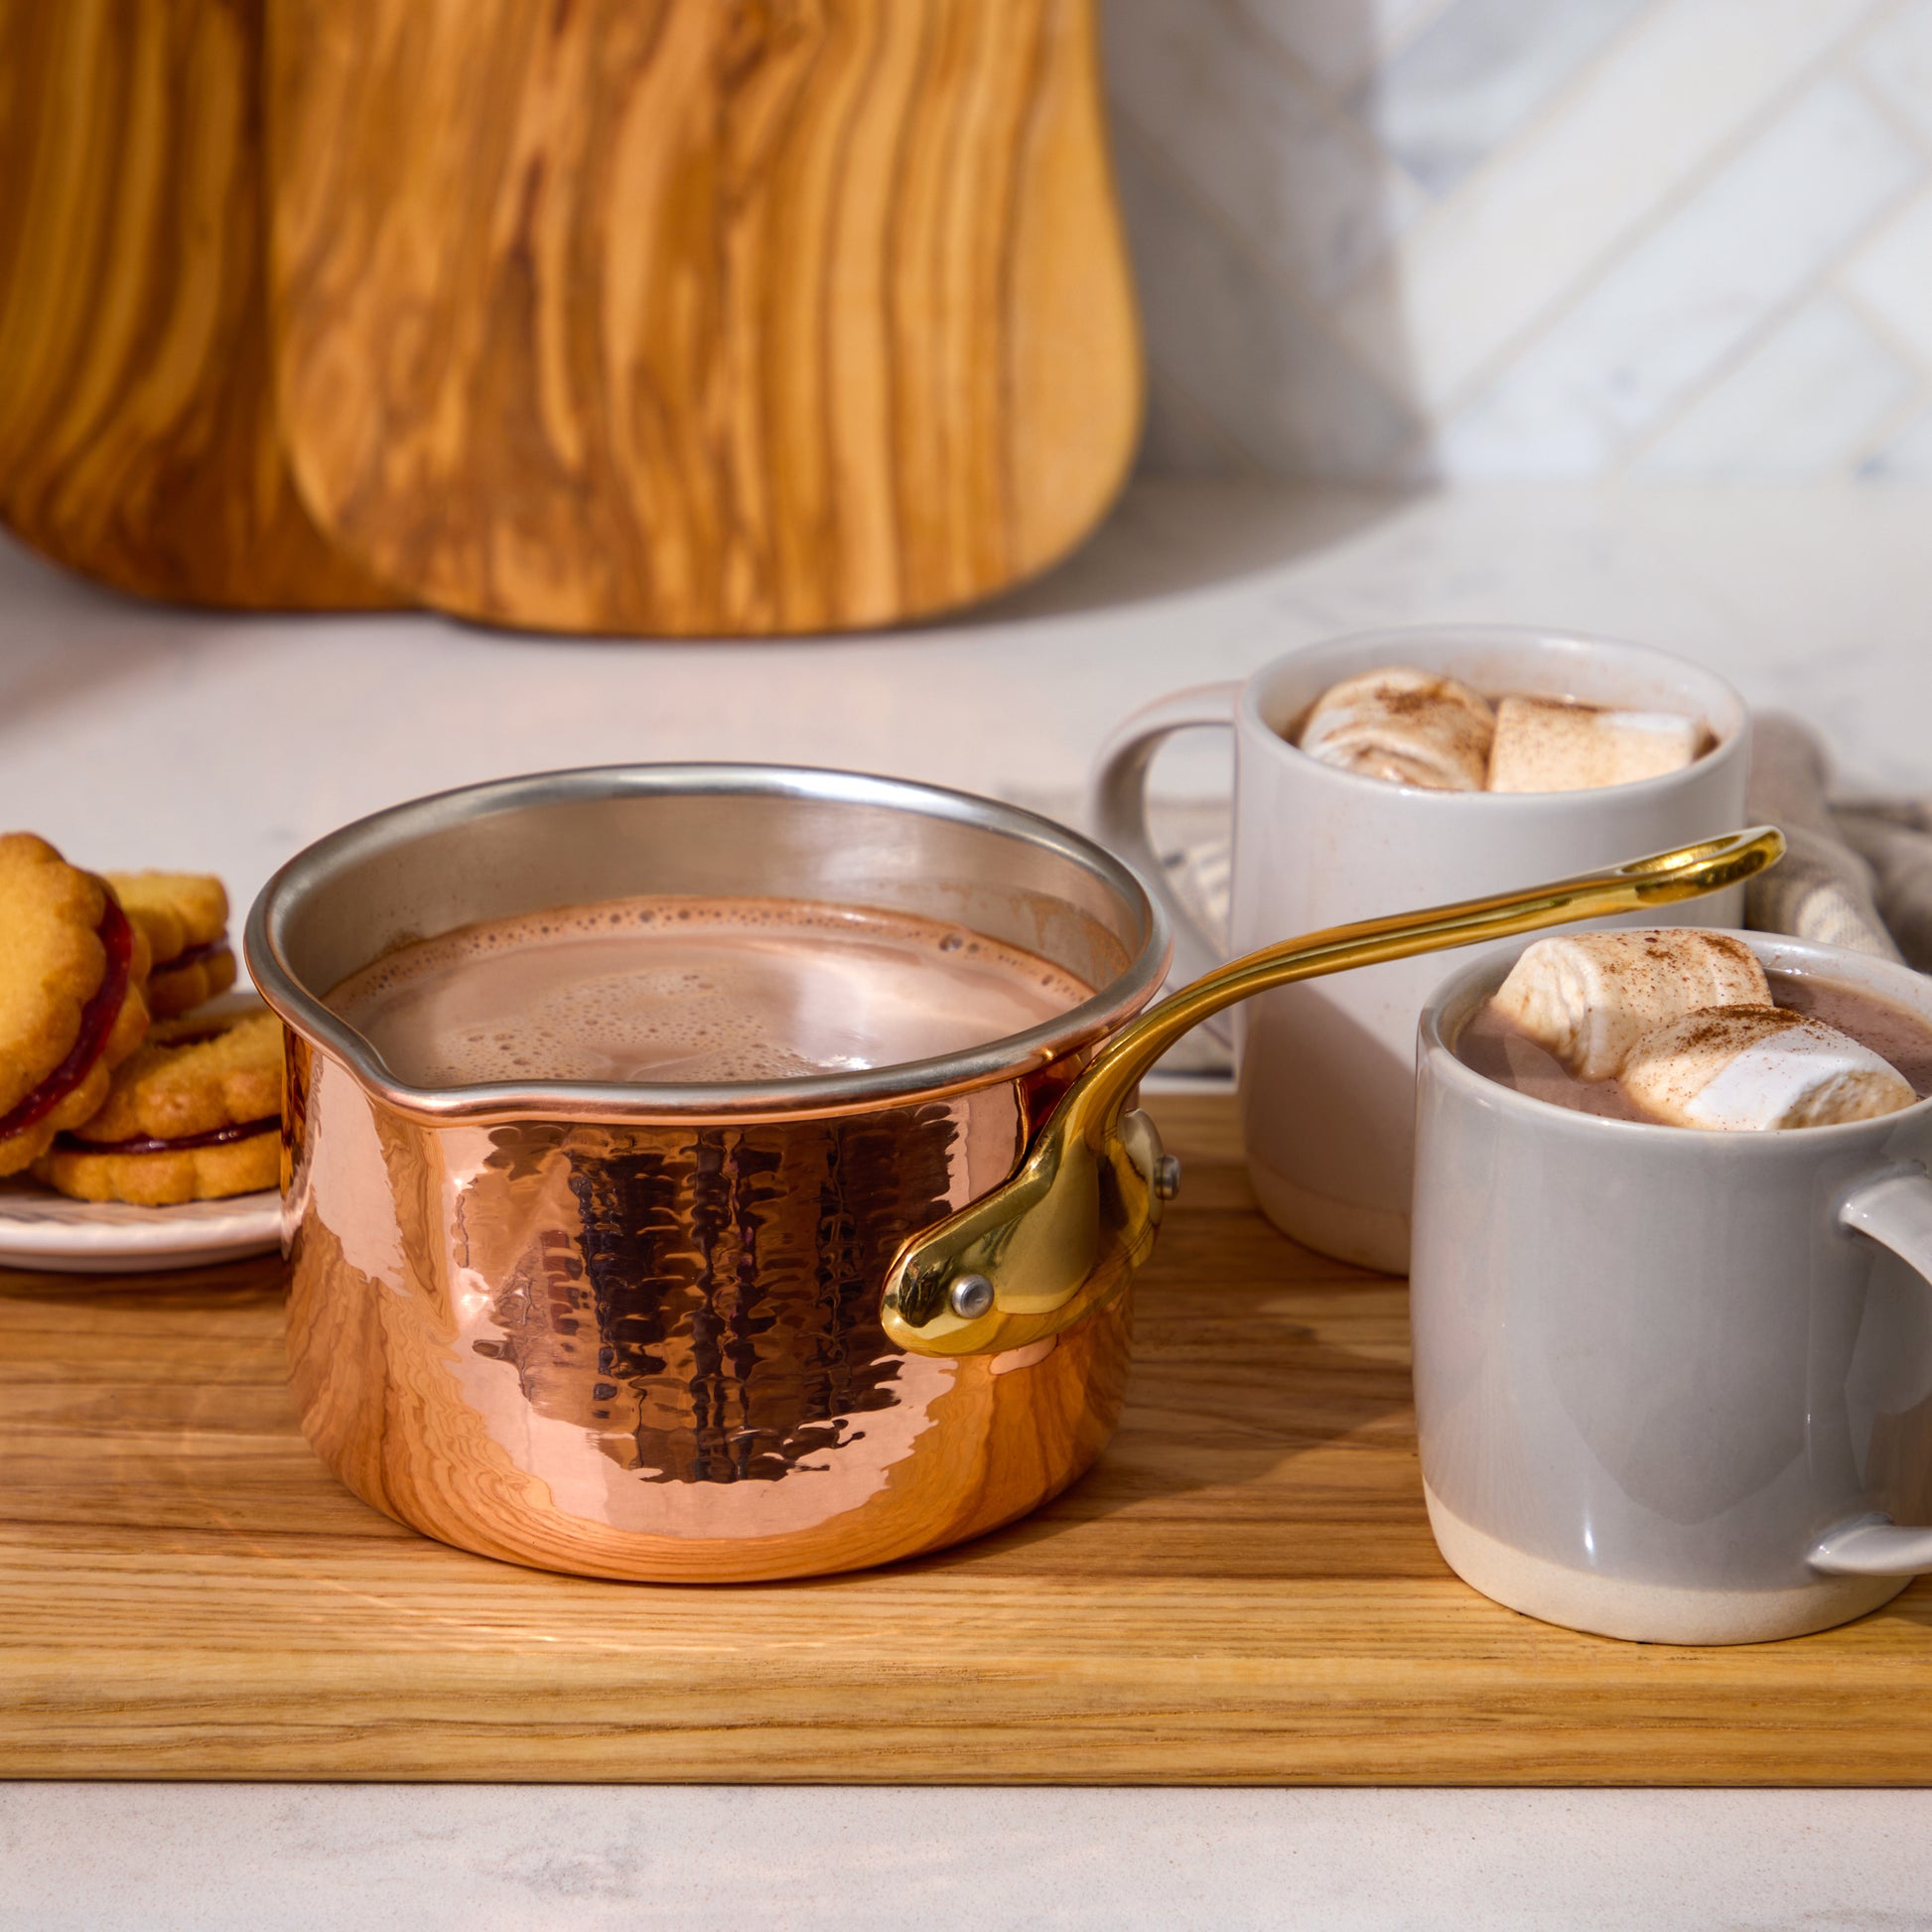 Ruffoni copper Saucepan with spout - Historia – Ruffoni US